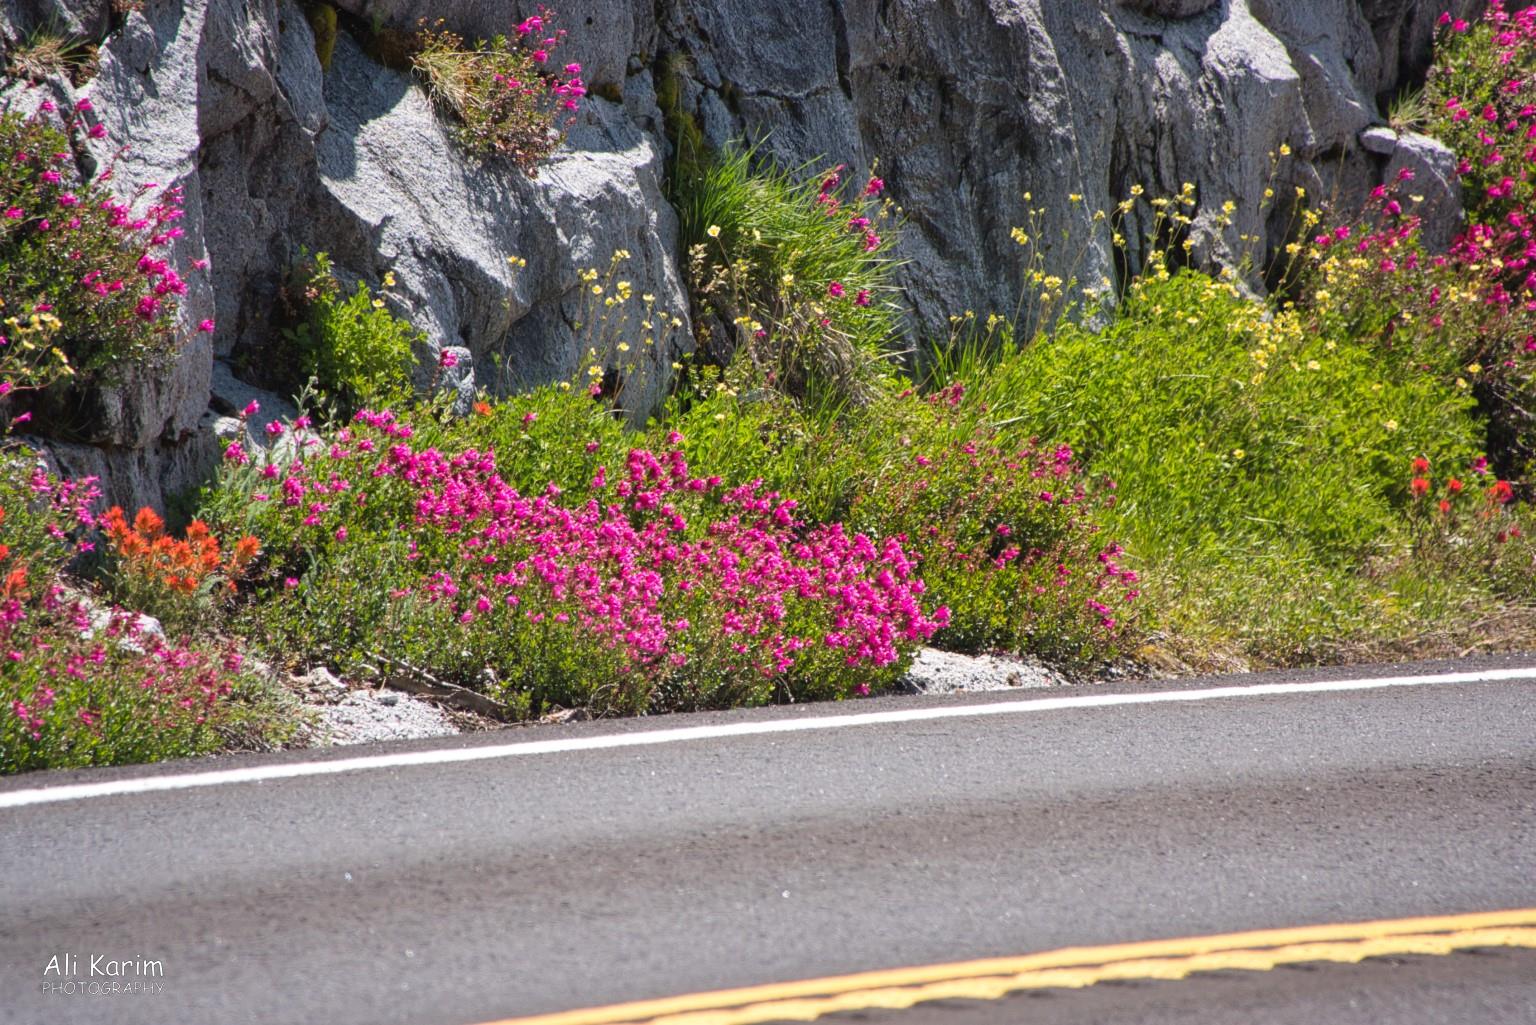 Yosemite to Death Valley, June 2020, Plenty of wildflowers by the roadside